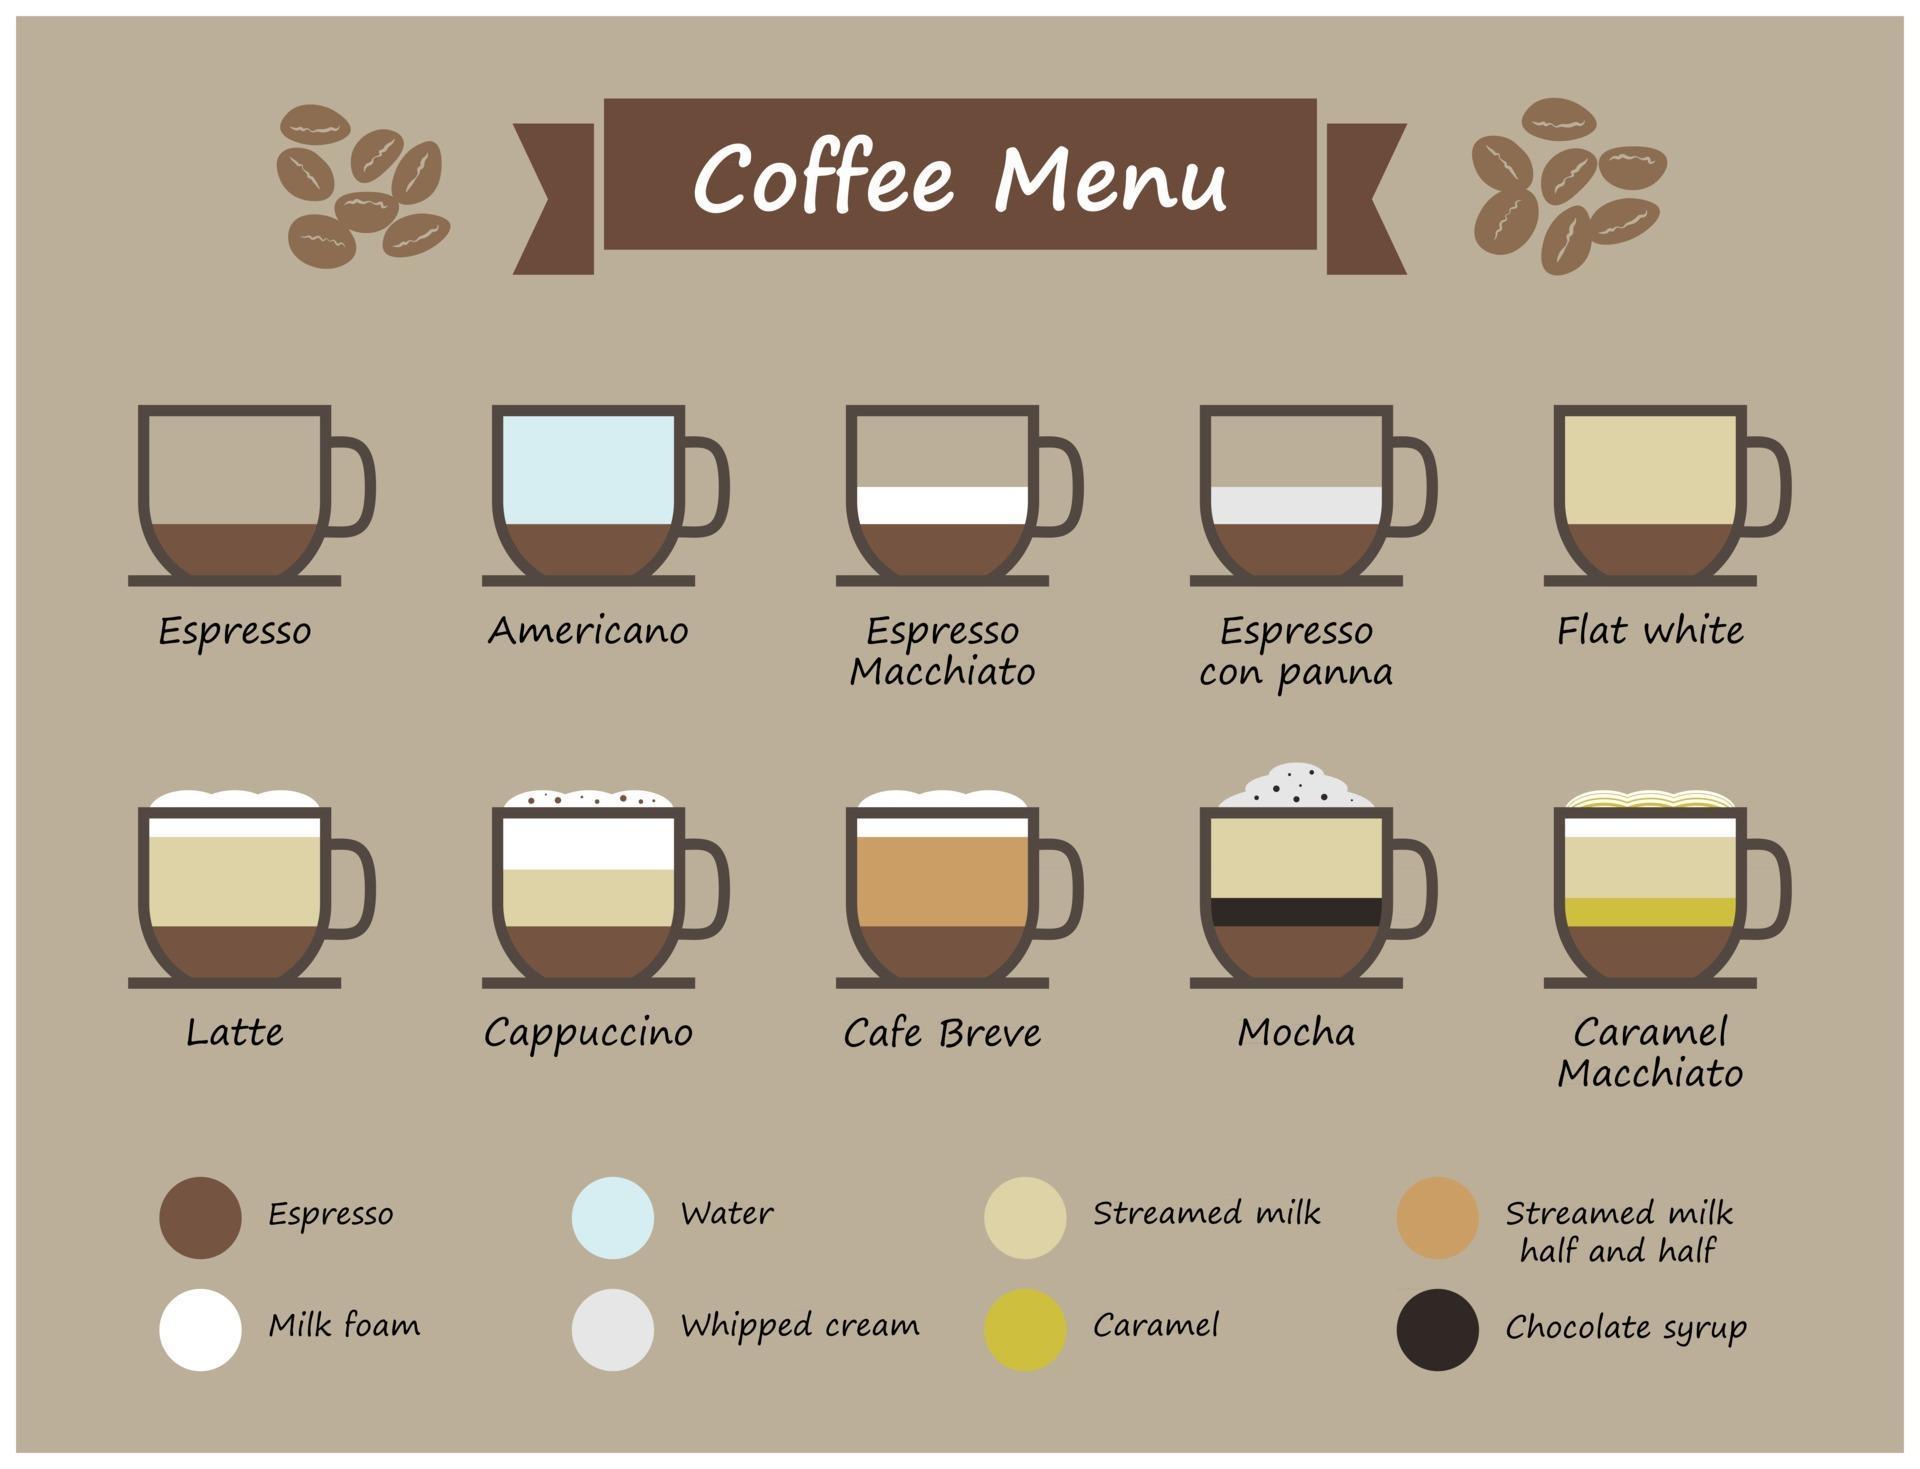 Флэт и капучино. Флэт Уайт кофе технологическая карта. Флэт Уайт пропорции кофе и молока. Флэт Уайт кофейные напитки. Кофейная карта флэт Уайт.